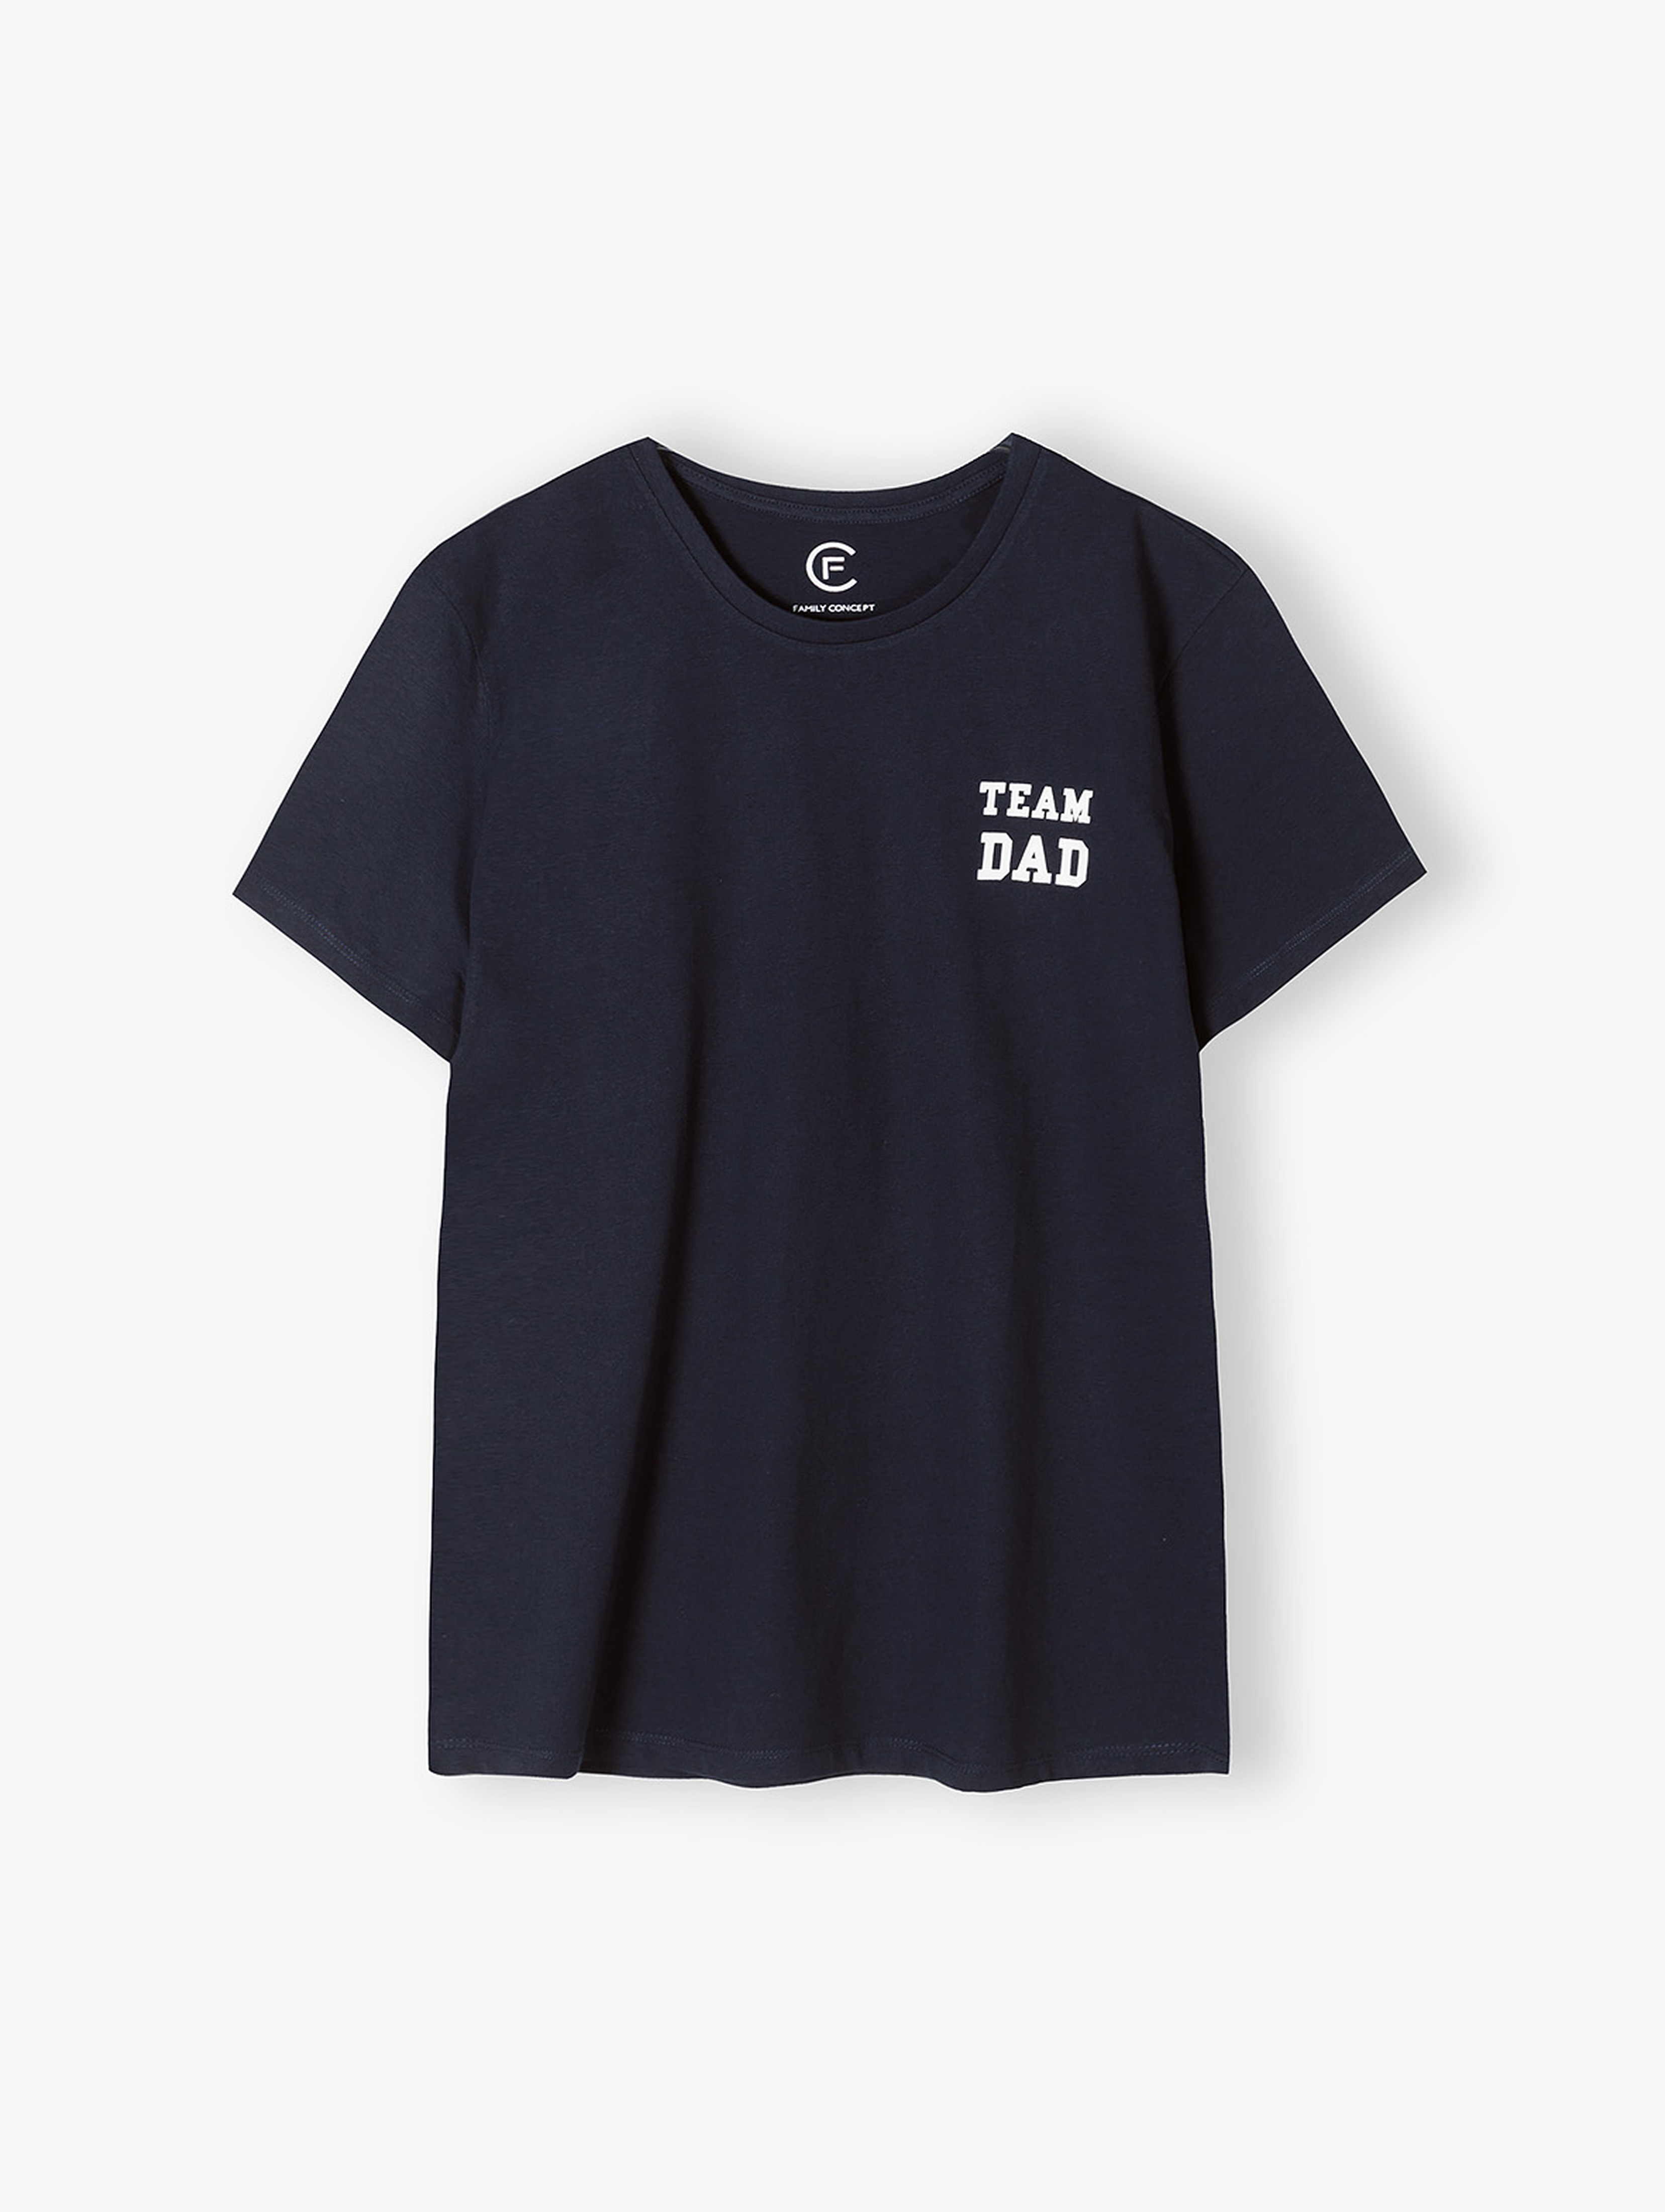 T-shirt męski z napisem Team Dad granatowy